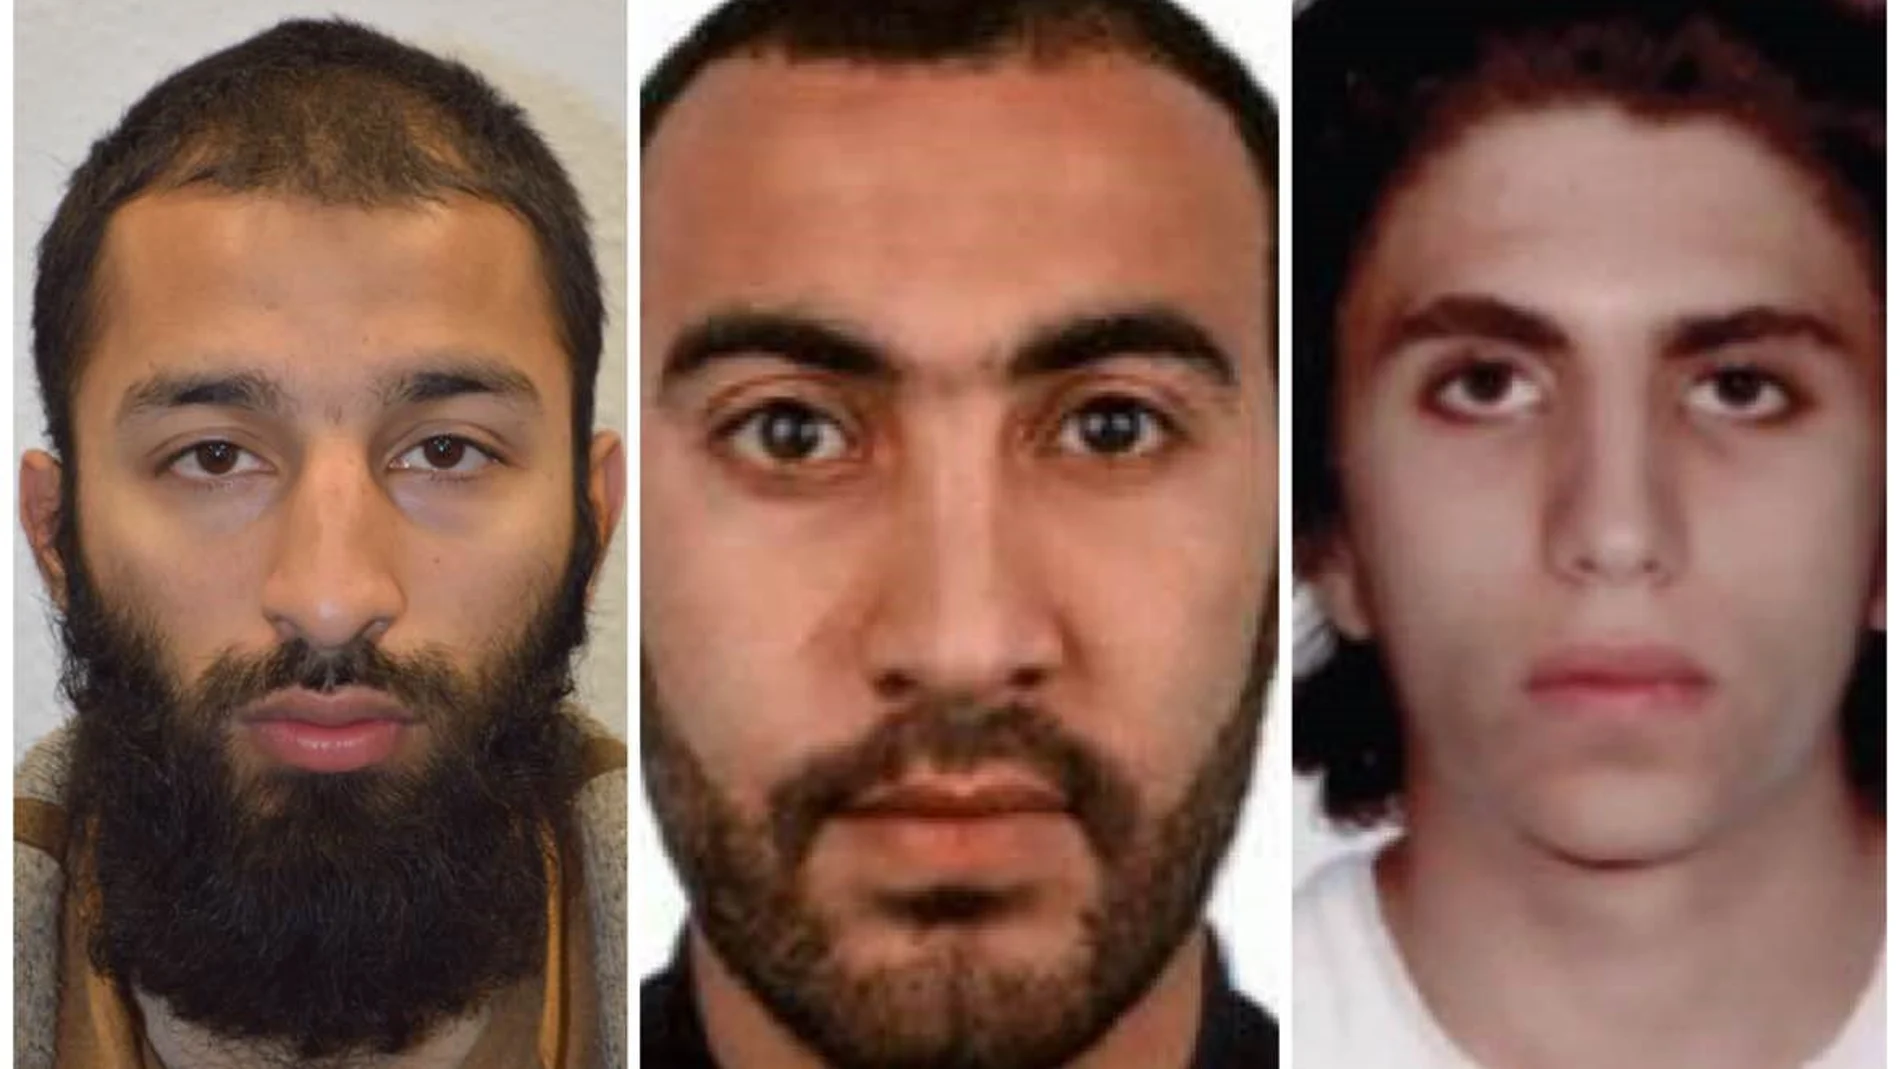 Khuram Shazad Butt, Rachid Redouane and Youssef Zaghba, los tres autores del atentado en Londres